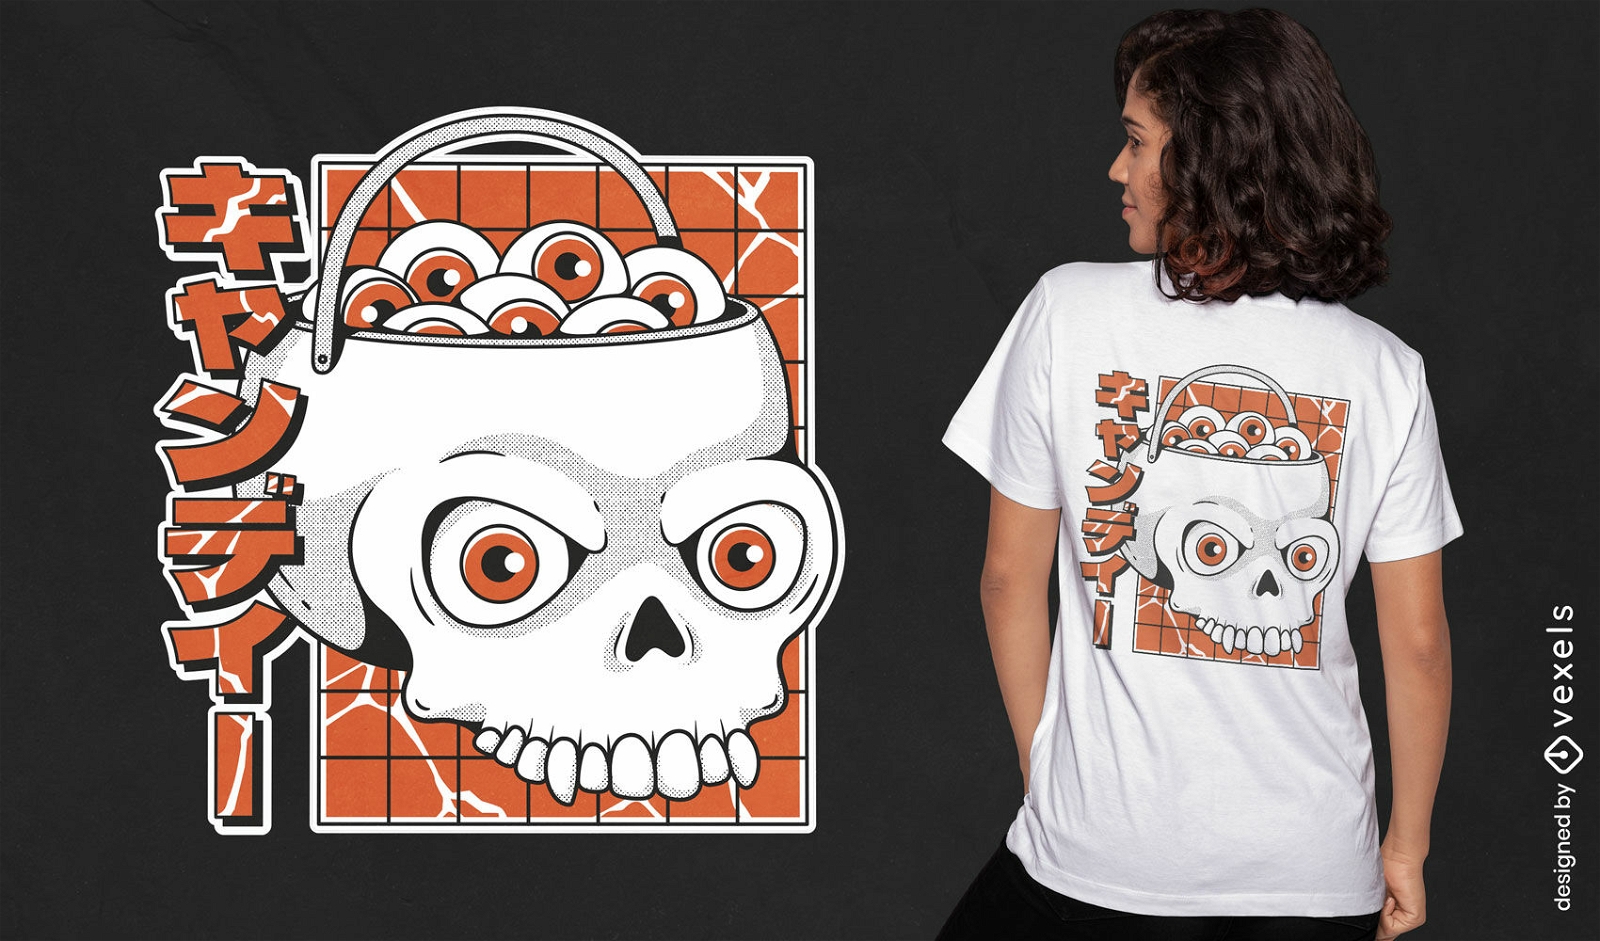 Candy skull t-shirt design